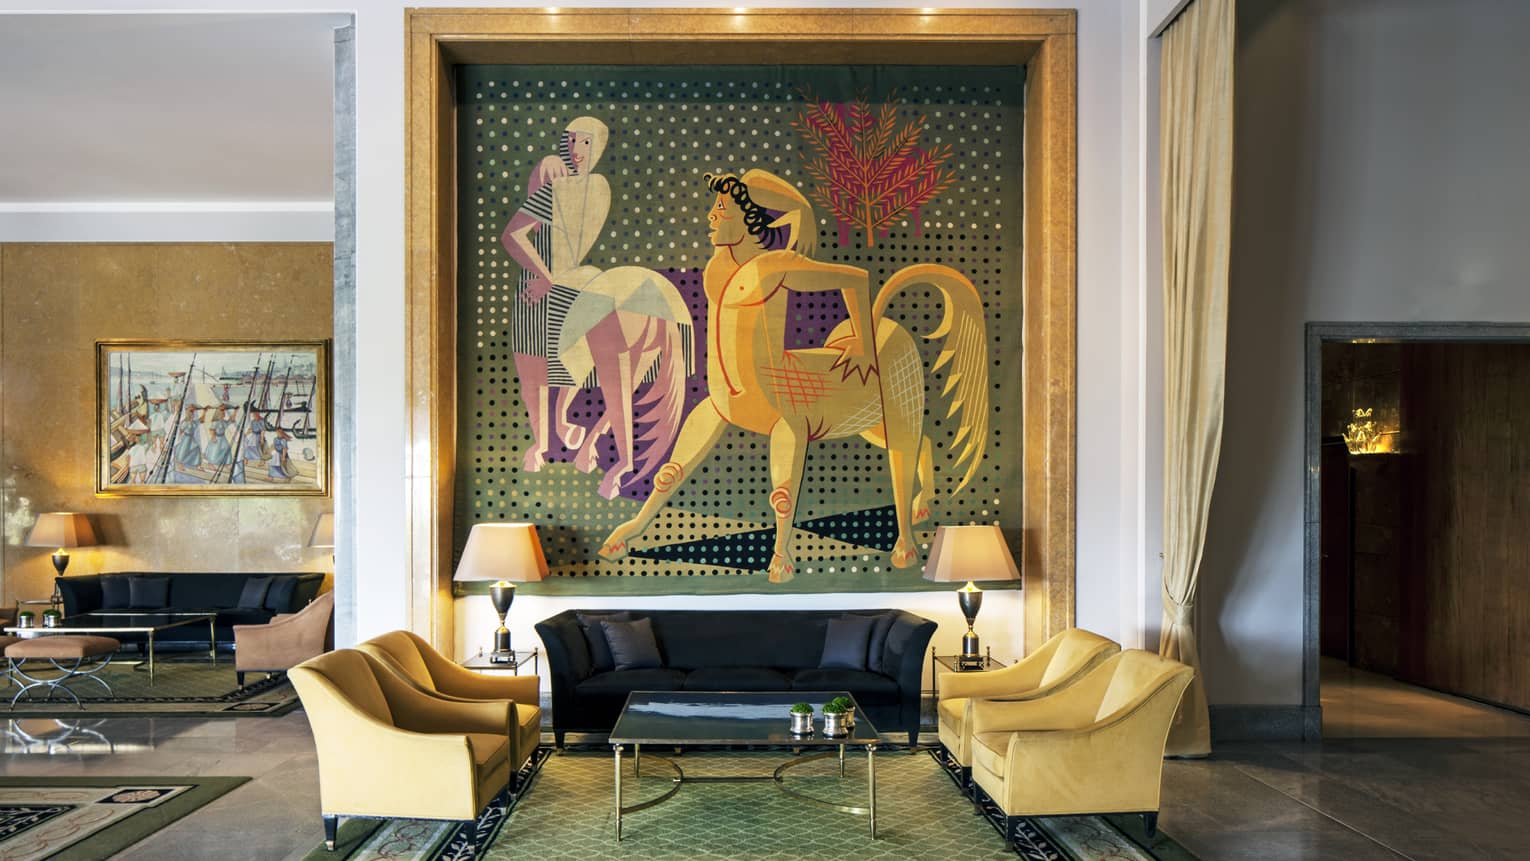 Almada Negreiros Lounge yellow armchairs below large handmade tapestry depicting centaurs